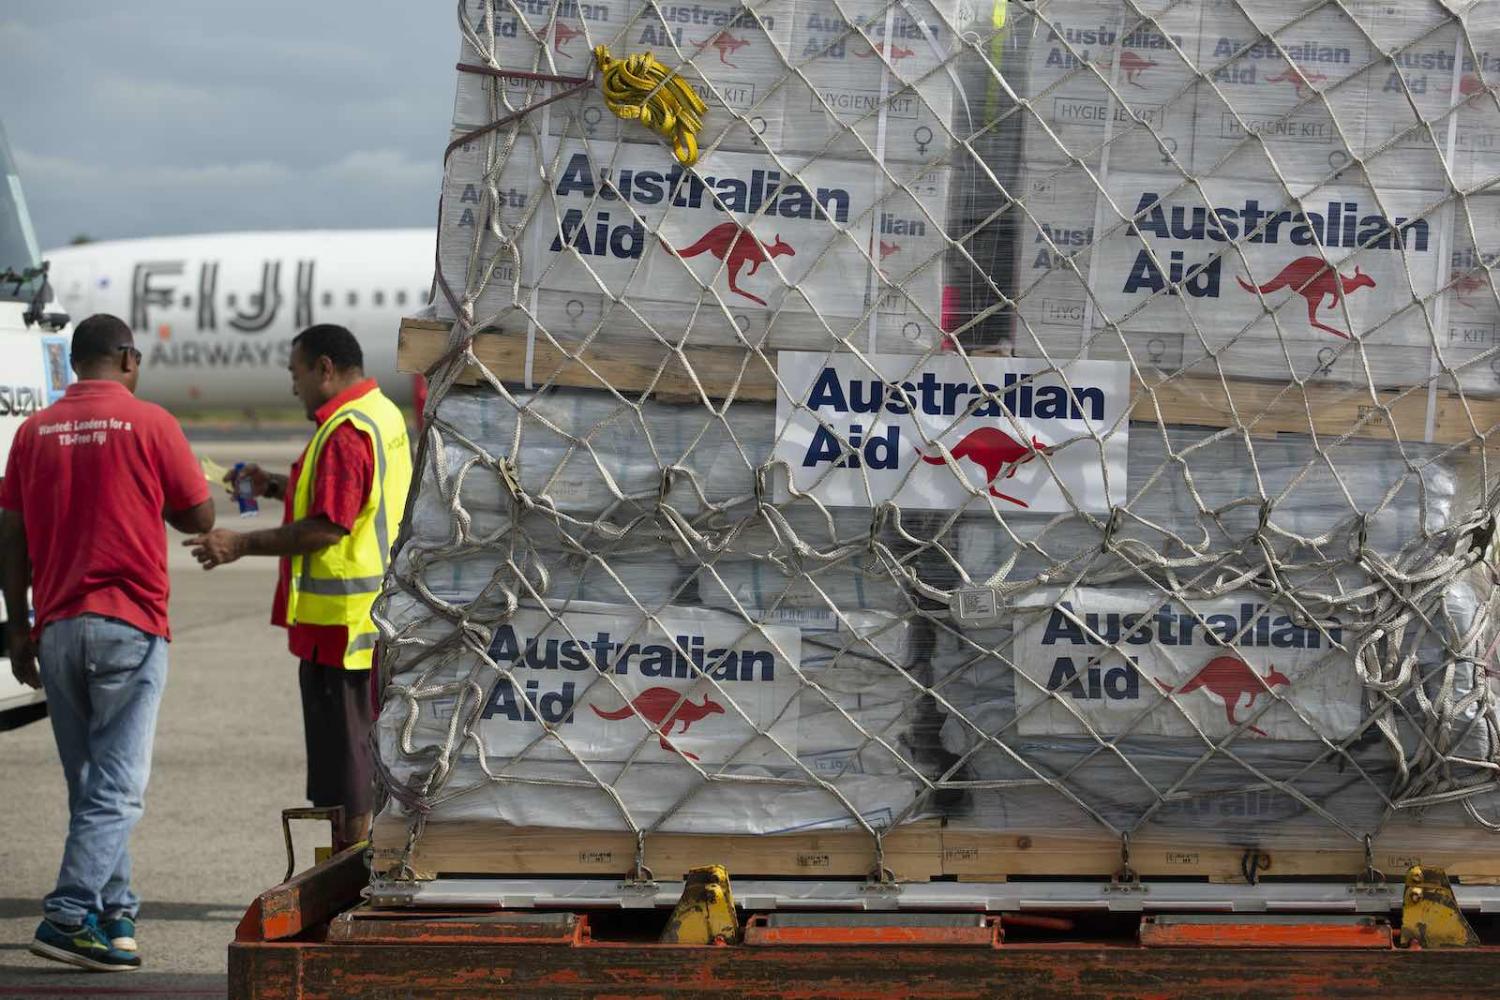 Offloading Australian humanitarian aid stores at Nadi airport, Fiji, in April (Department of Defence)